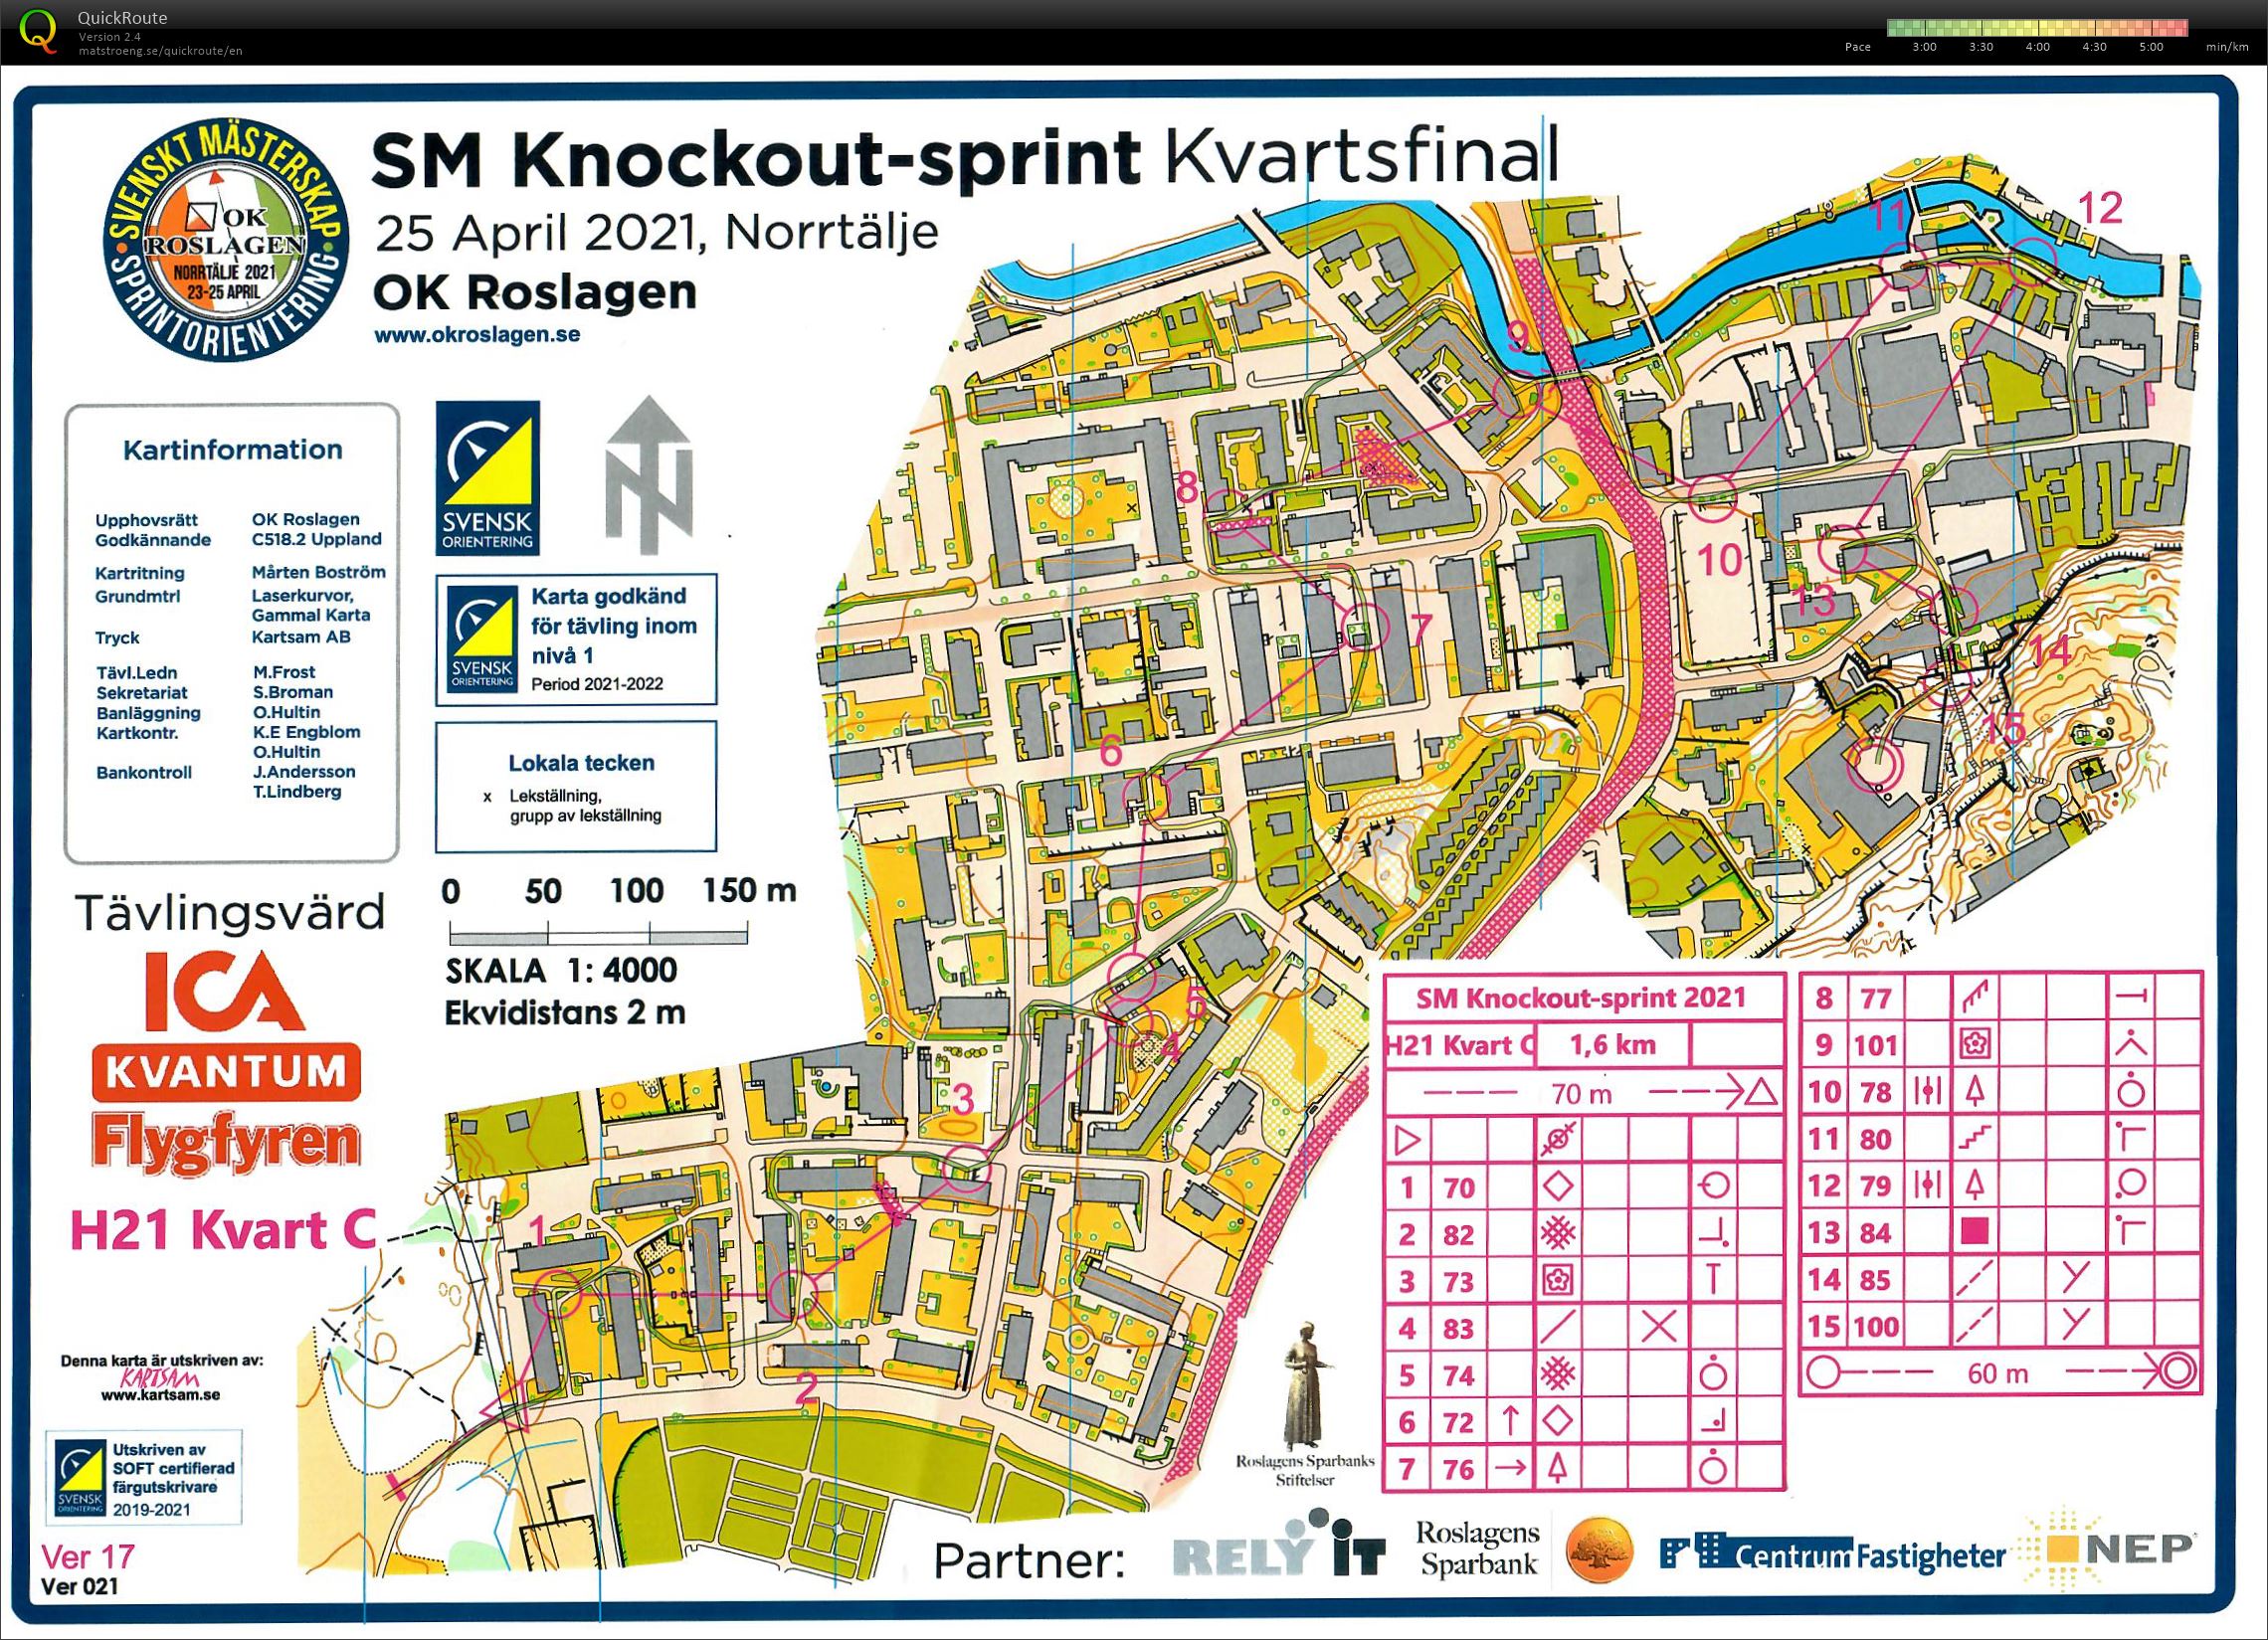 SM Knockout-sprint Kvartsfinal (25-04-2021)